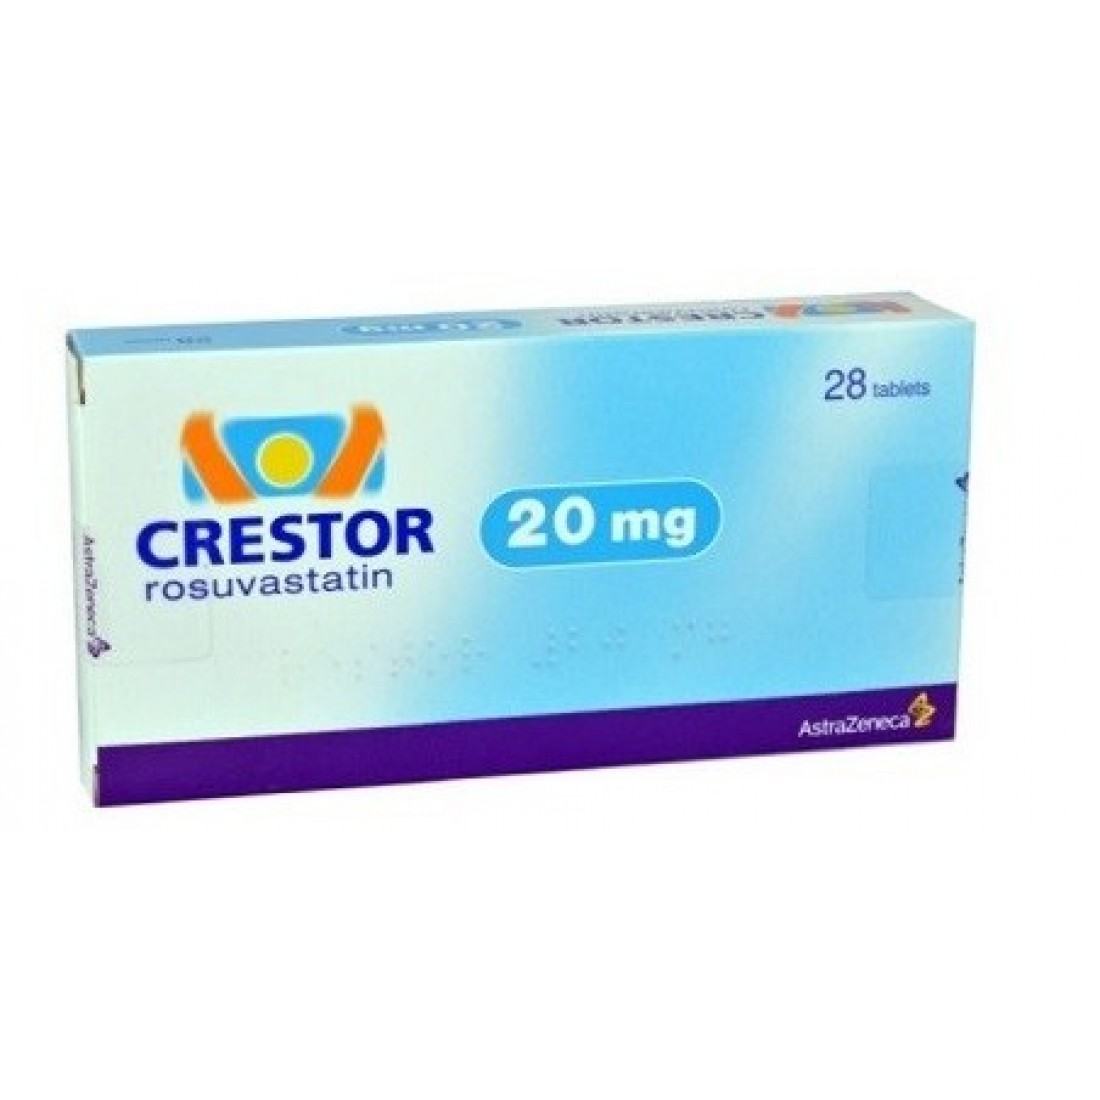 crestor-20mg-28-tabs-creator-set